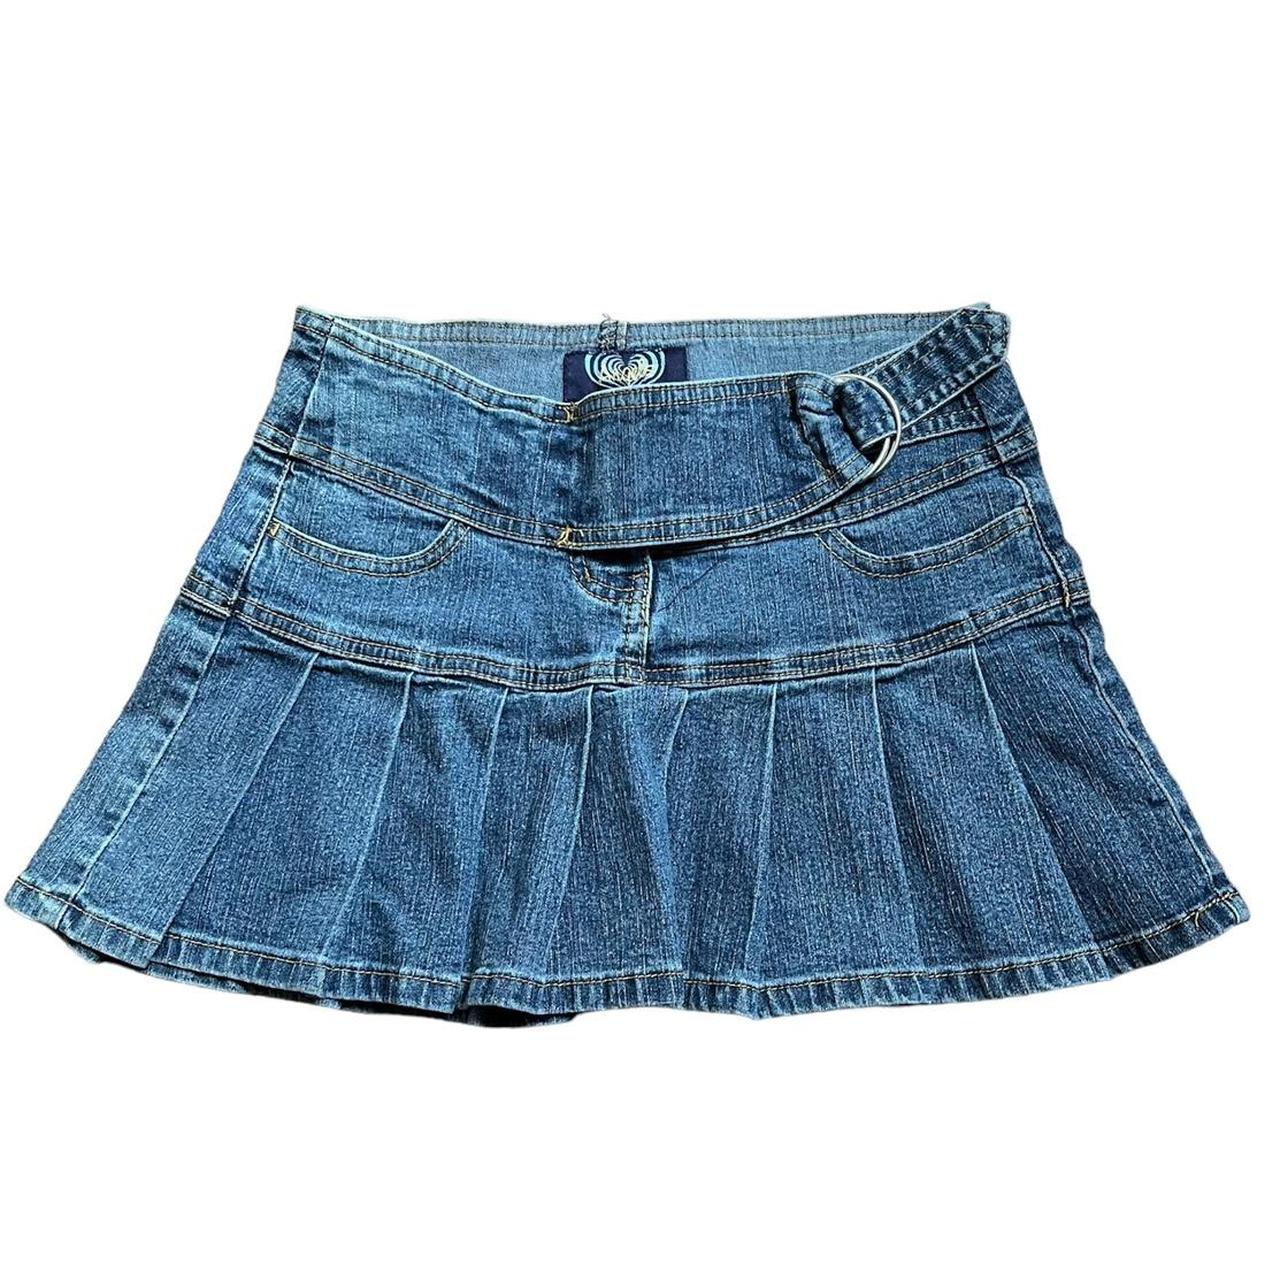 Pleated Mini Skirt - the most perfect denim pleated... - Depop